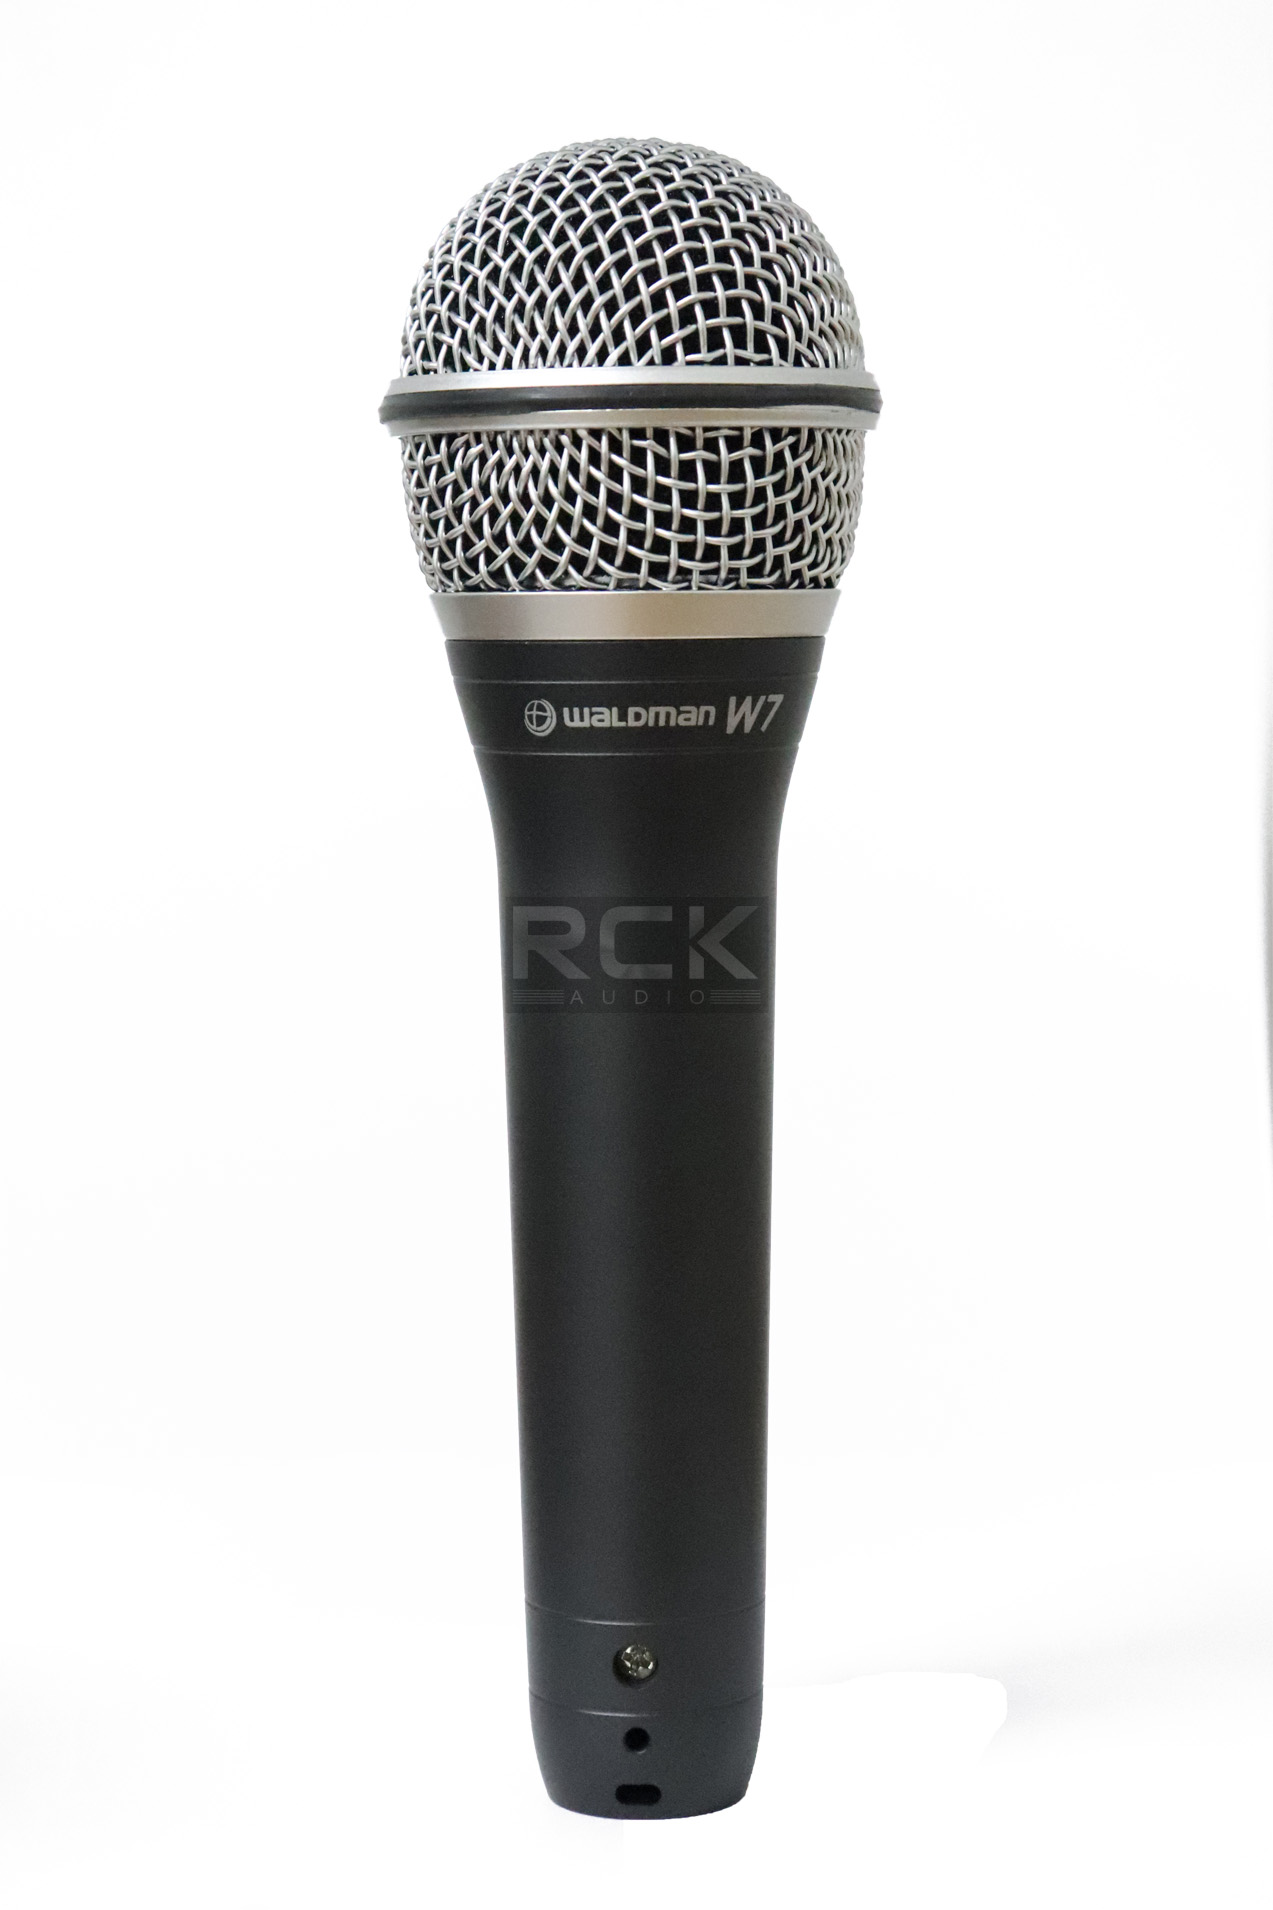 Microfone Profissional Supercardióide Waldman W7